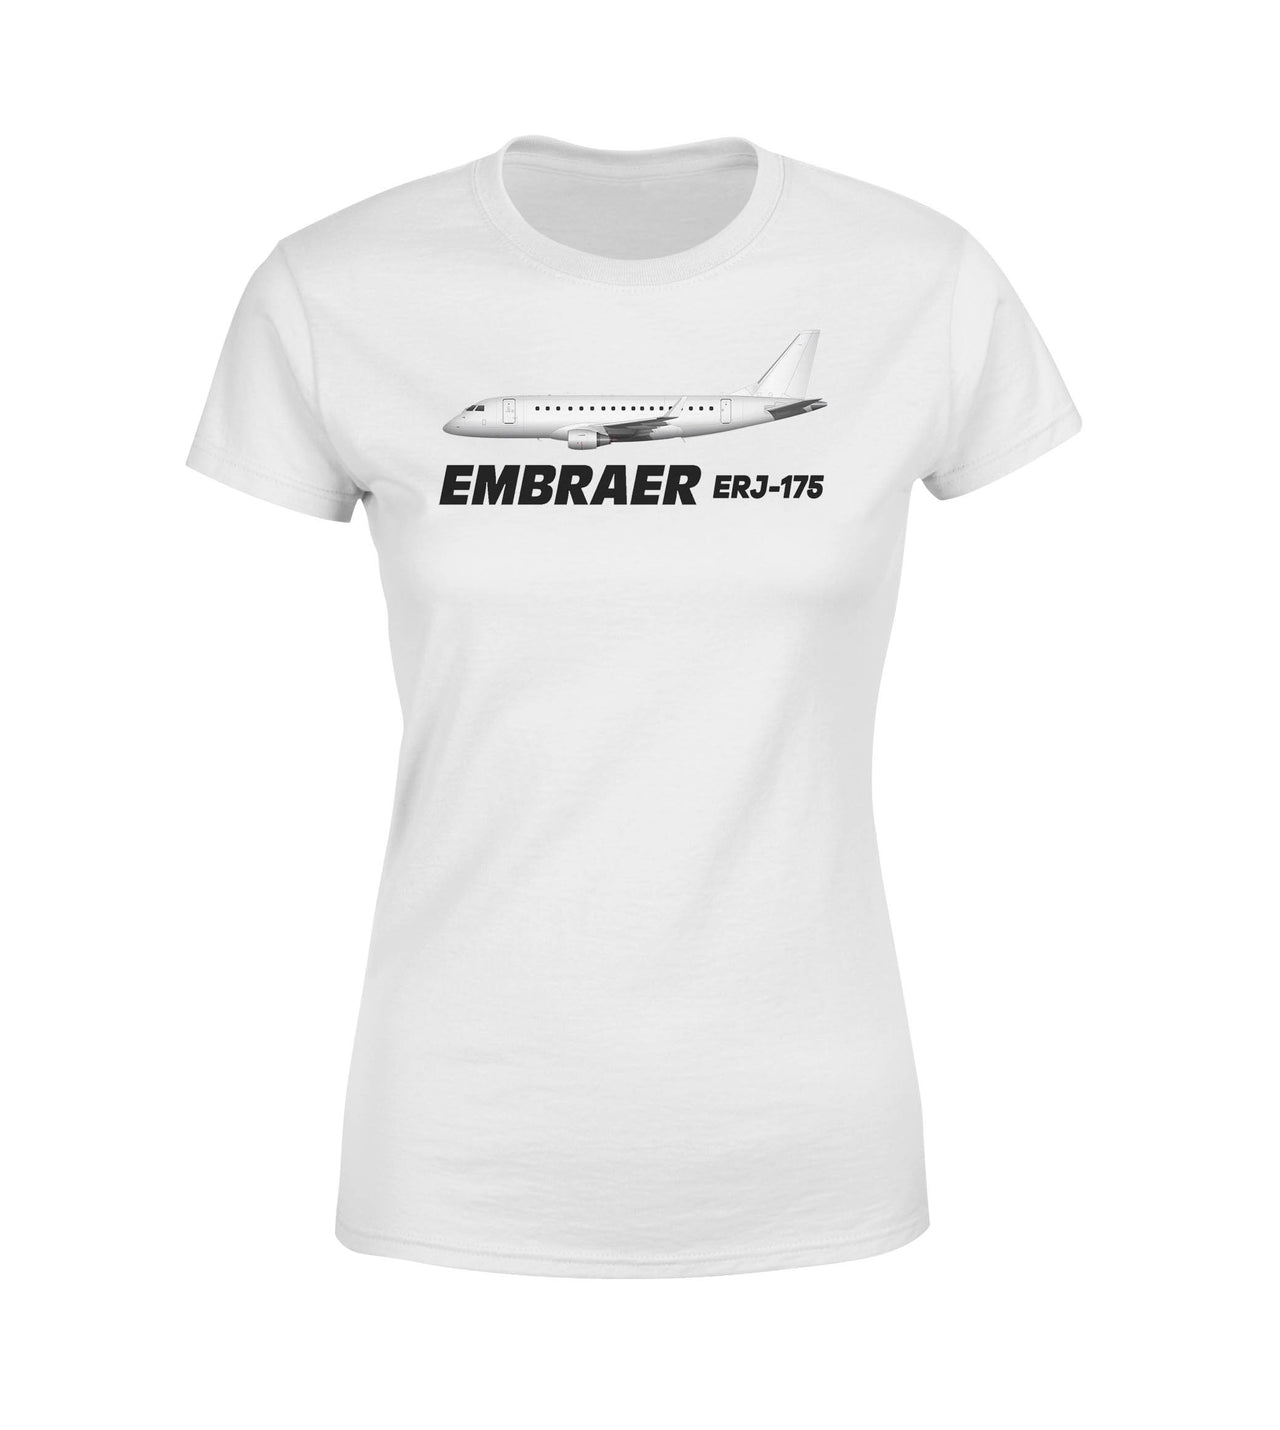 The Embraer ERJ-175 Designed Women T-Shirts